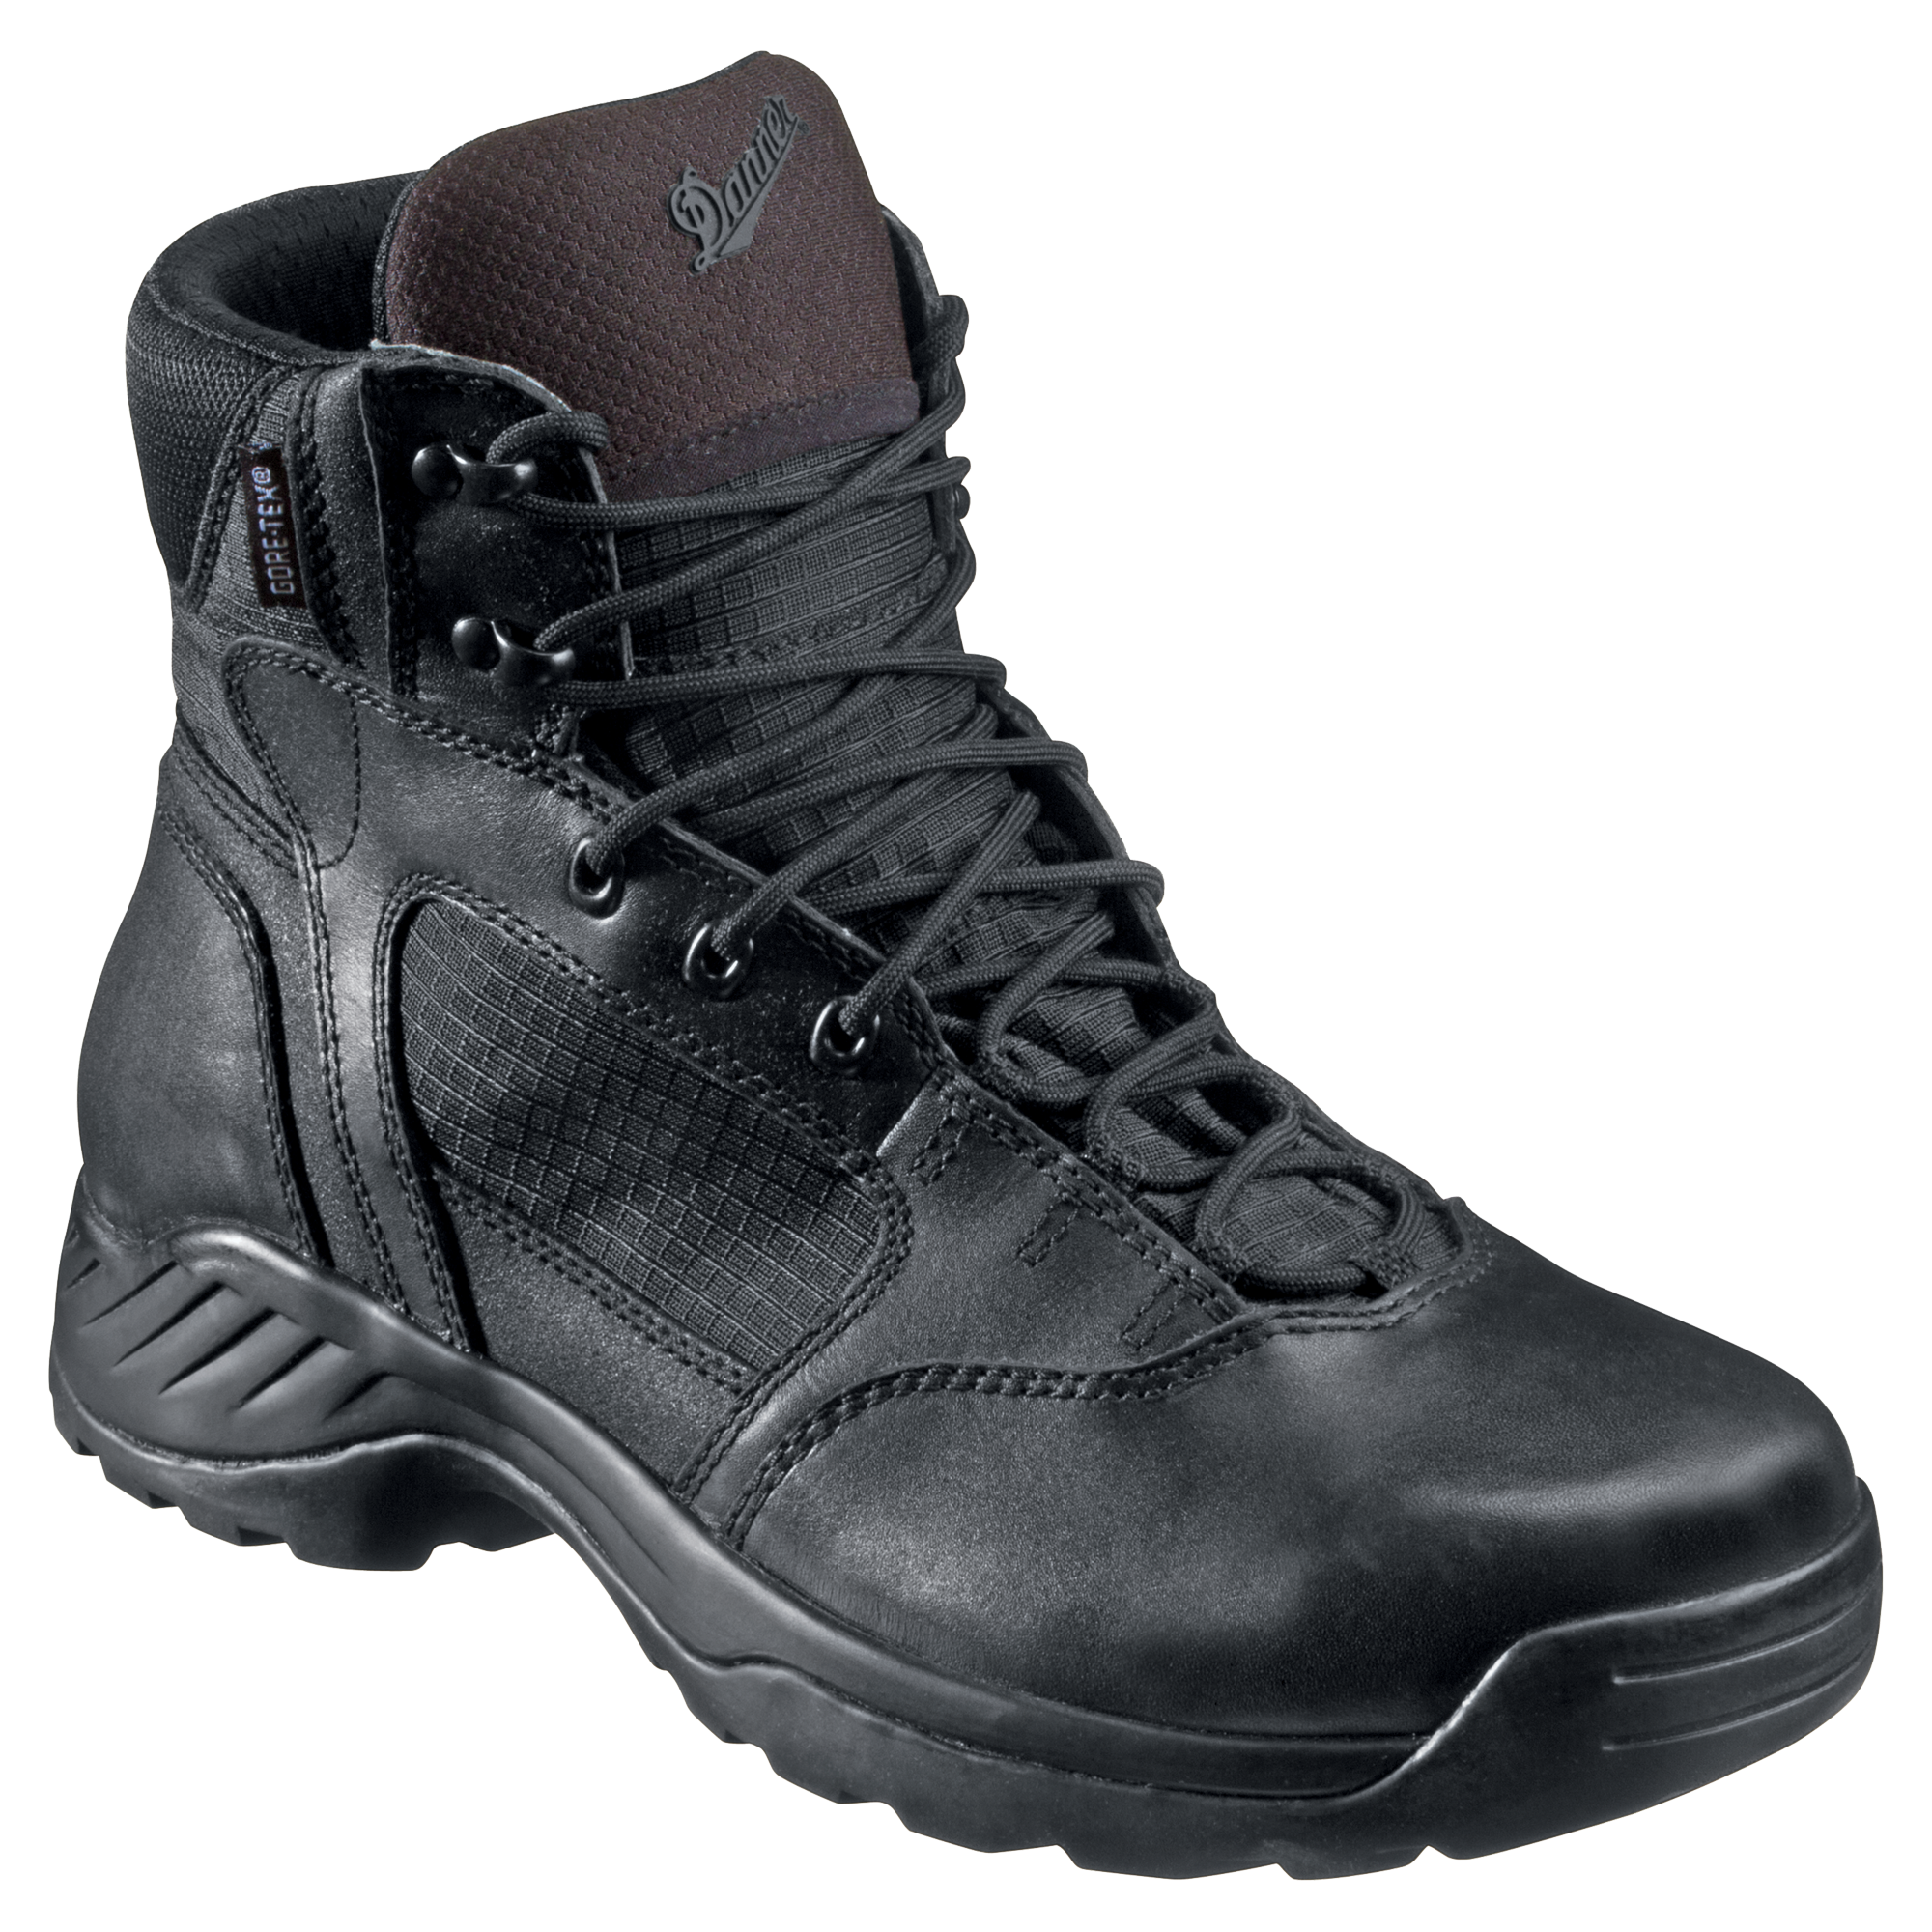 Danner Kinetic Side-Zip GORE-TEX Work Boots for Men - Black - 10.5W